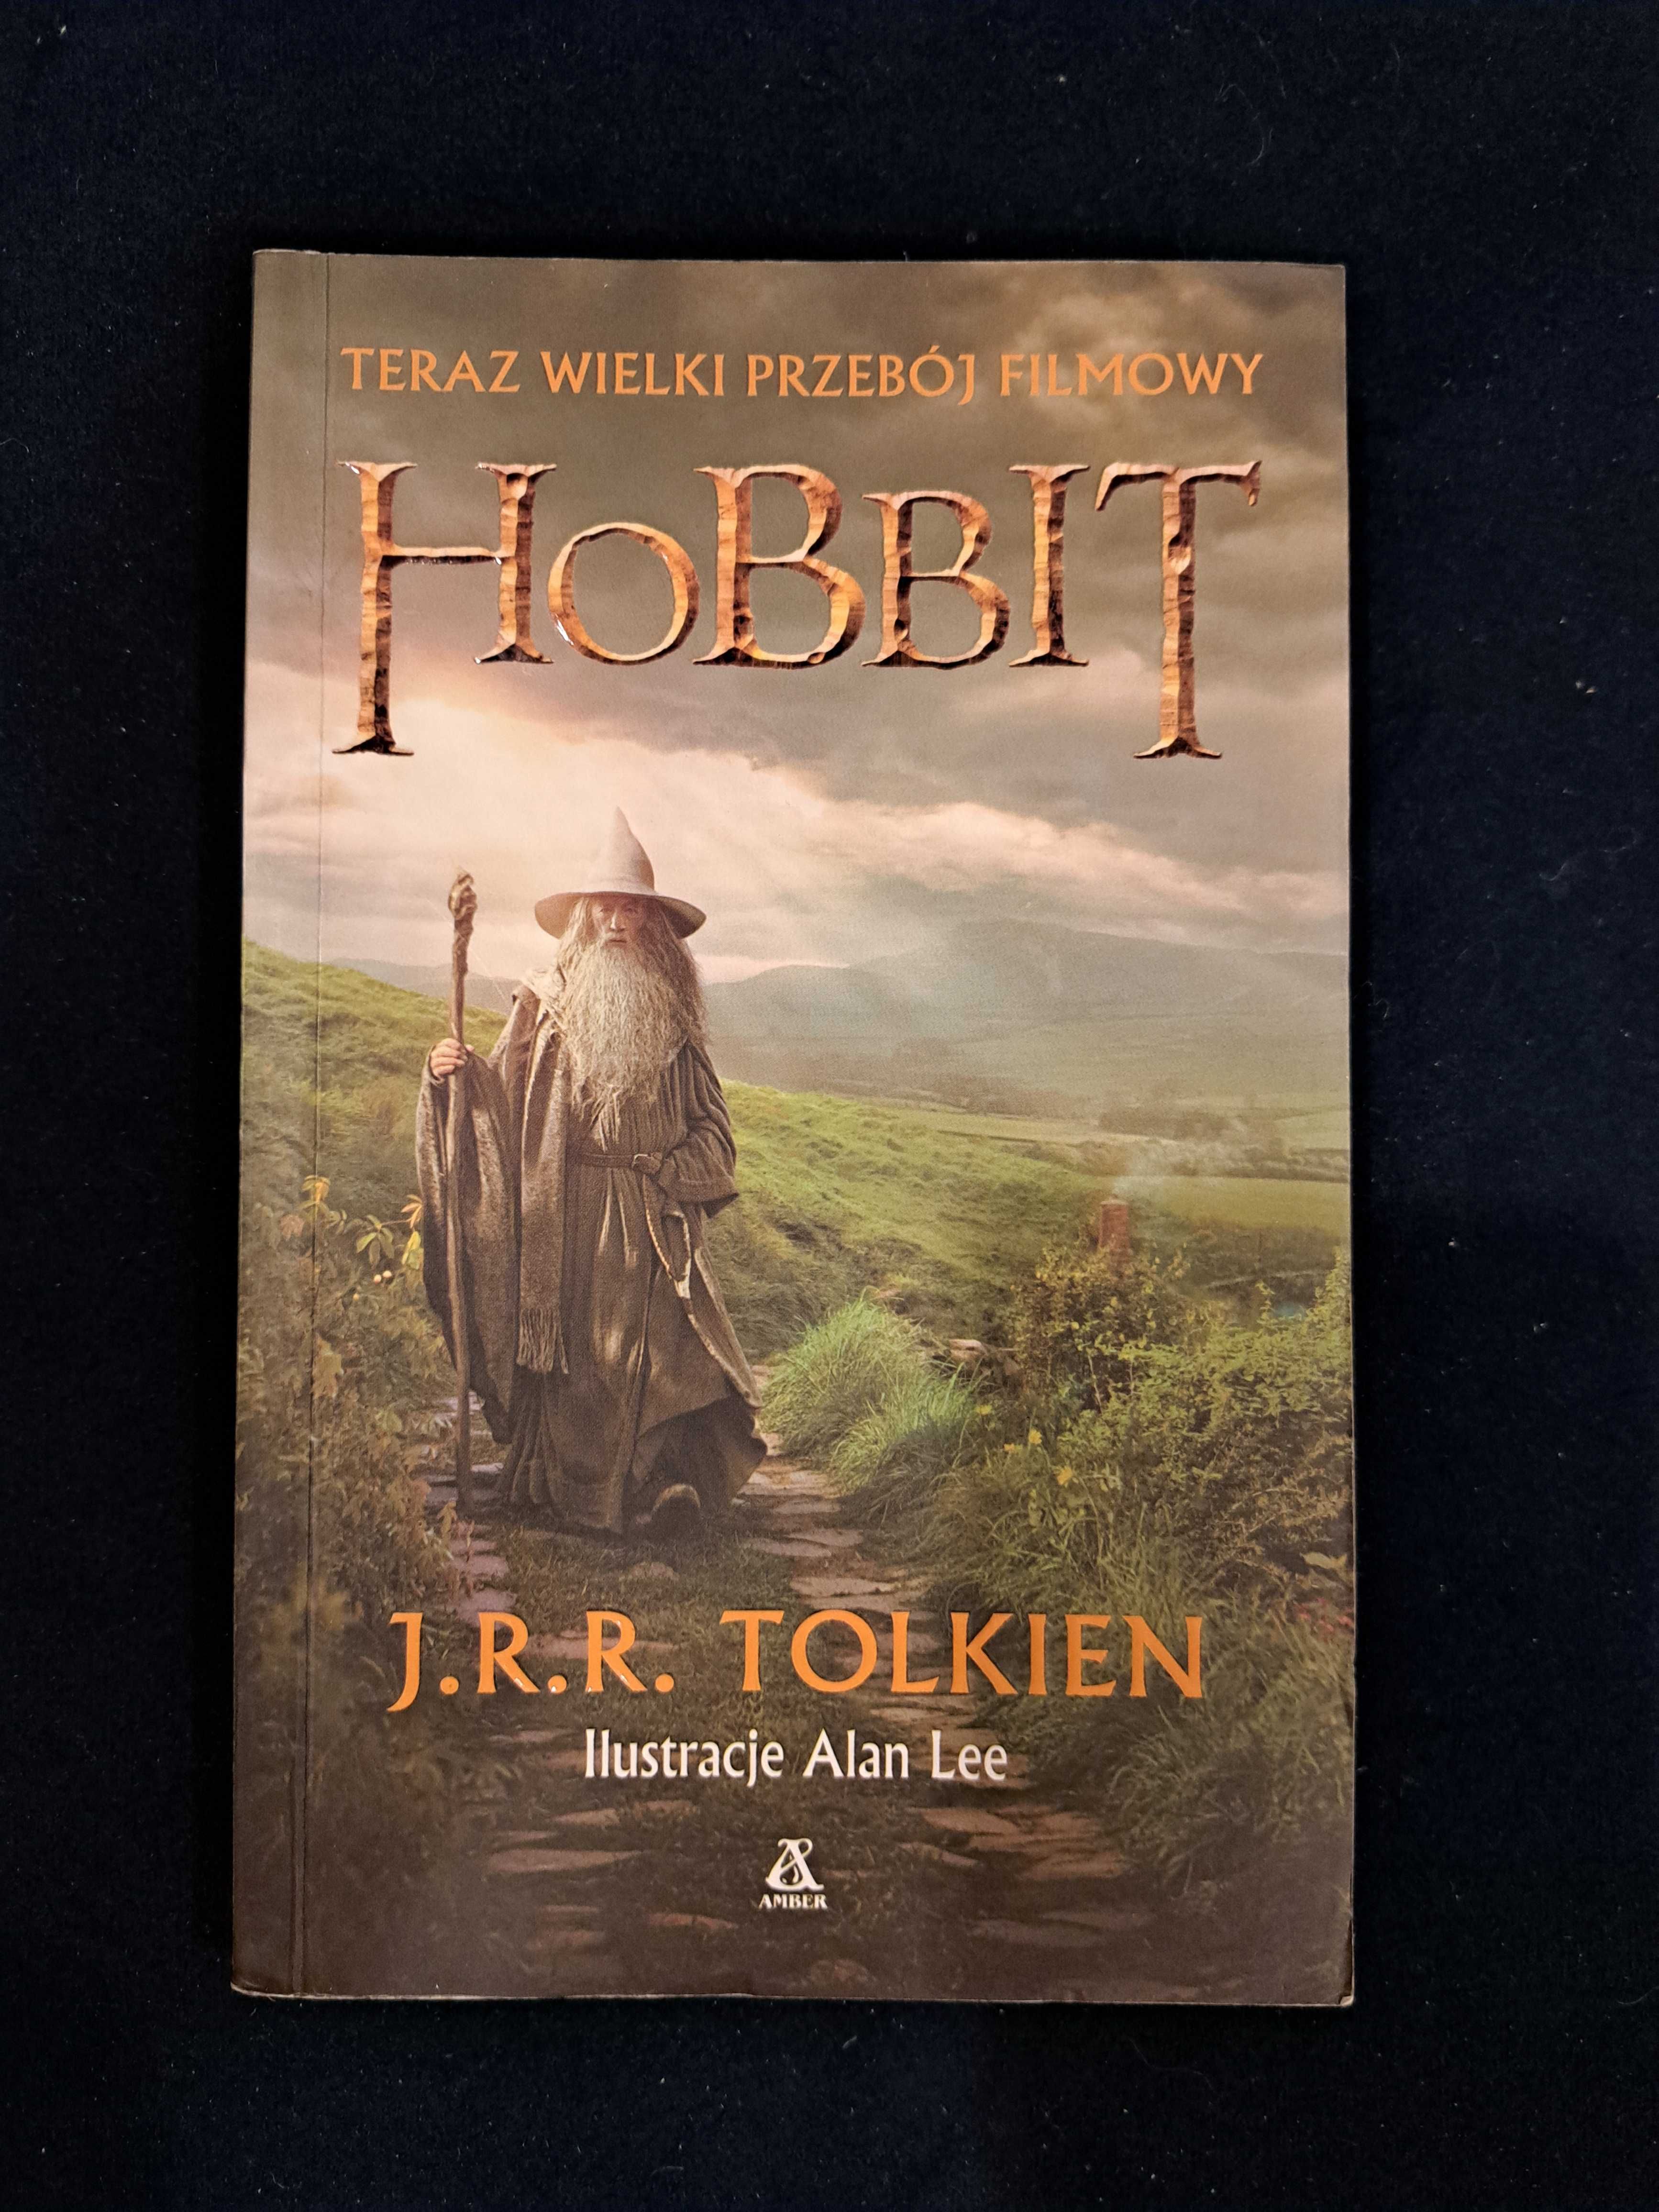 J.R.R. Tolkien Hobbit ilustracje Alan Lee